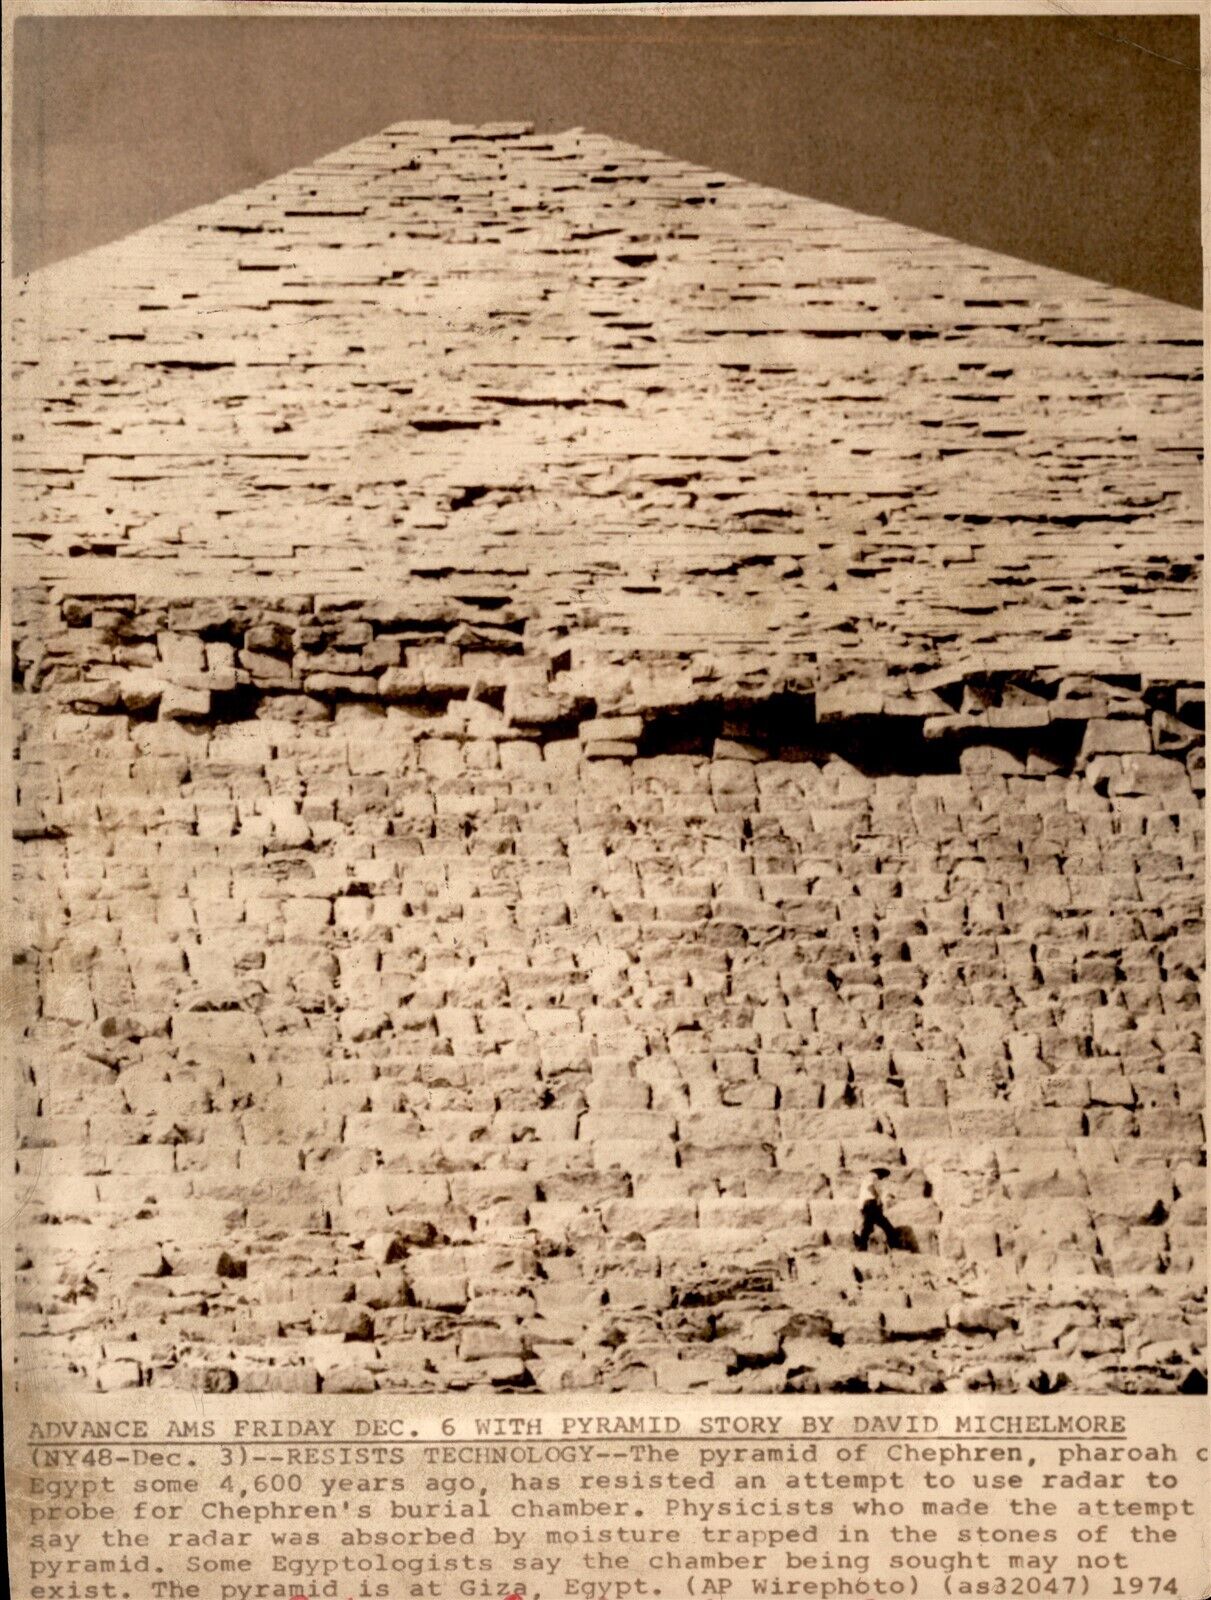 LG20 1974 AP Wire Photo GIZA EGYPT PYRAMID OF CHEPHREN RESISTS RADAR RECHNOLOGY